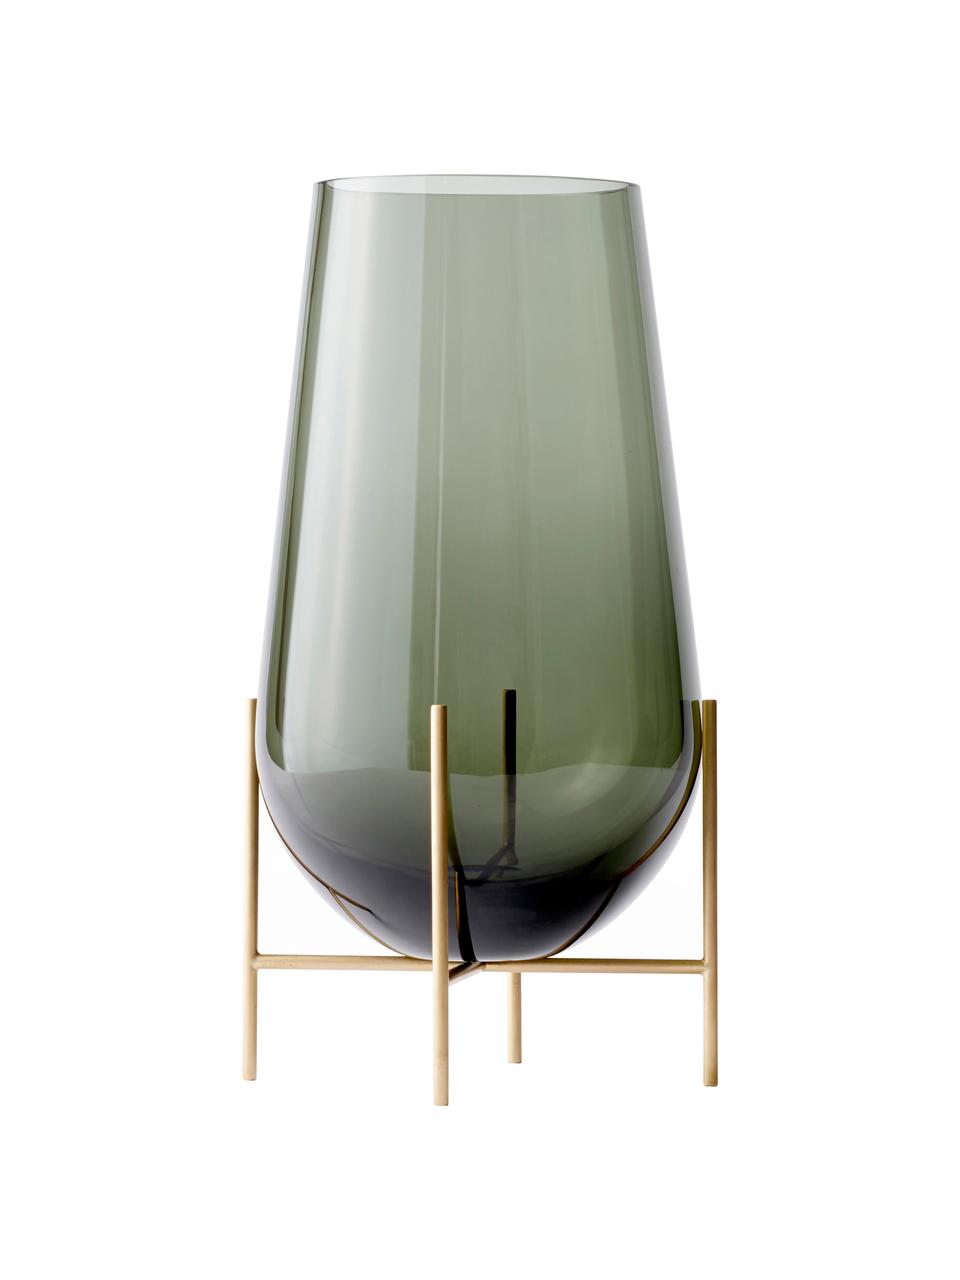 Grote mondgeblazen design vaas Echasse, Frame: messing, Vaas: mondgeblazen glas, Groen, goudkleurig, Ø 22 x H 44 cm